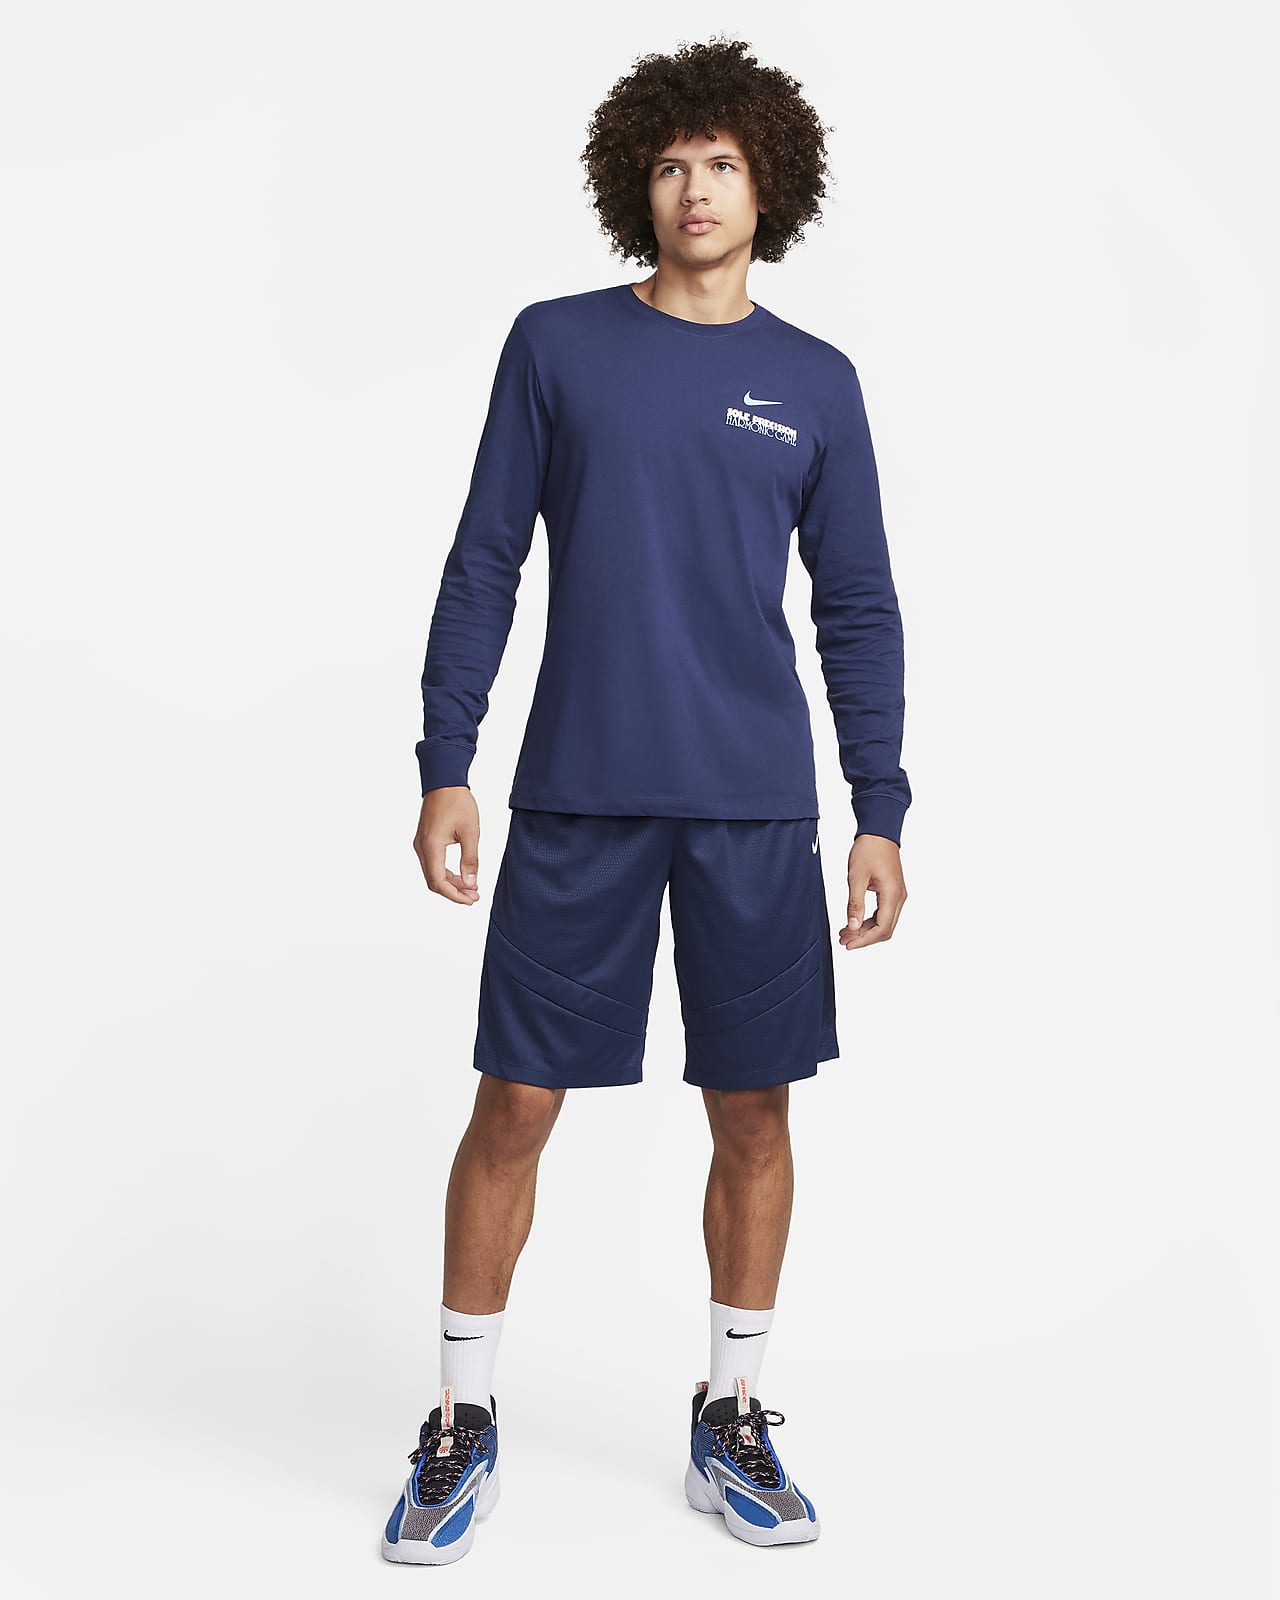 Nike Icon Men's Dri-FIT 8 Basketball Shorts.